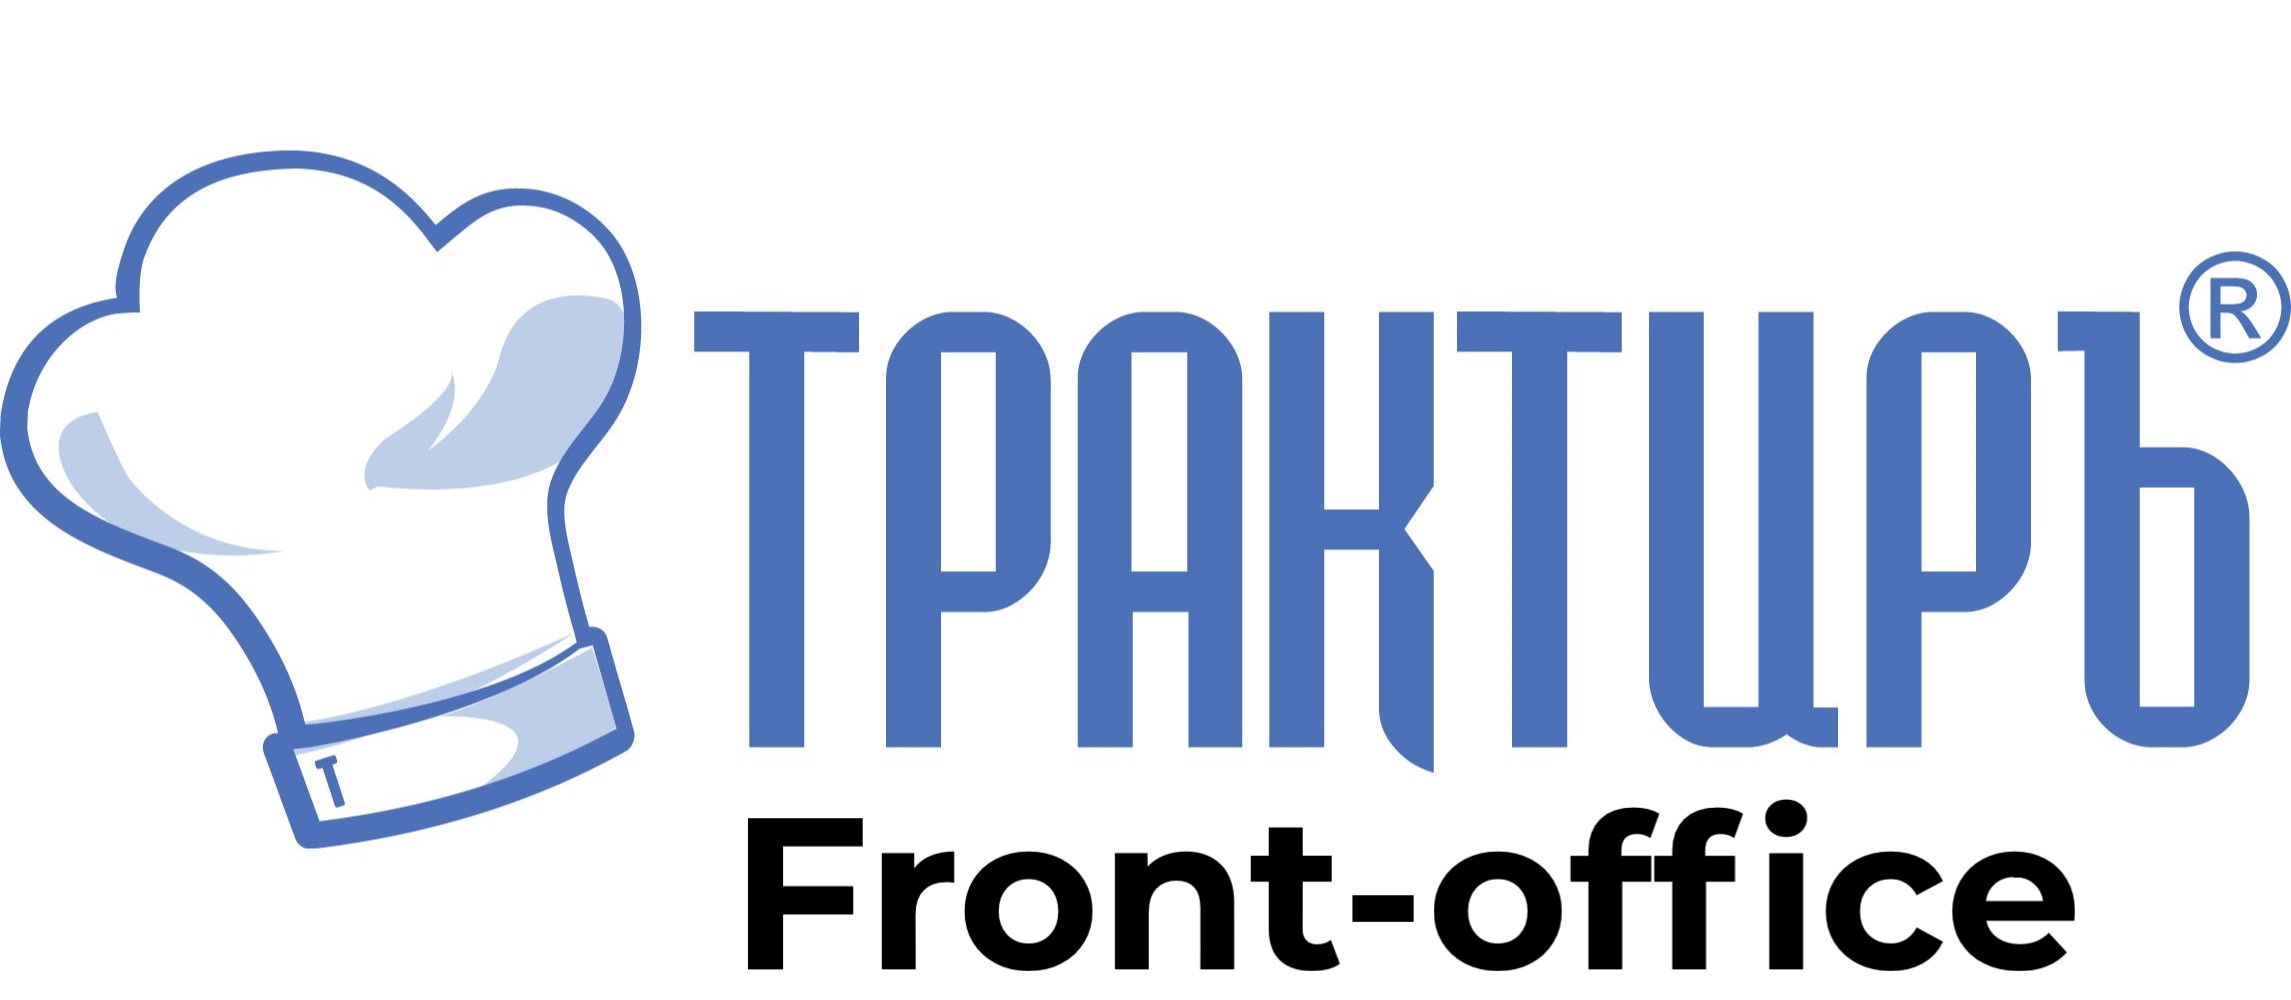 Трактиръ: Front-Office v4.5  Основная поставка в Новосибирске